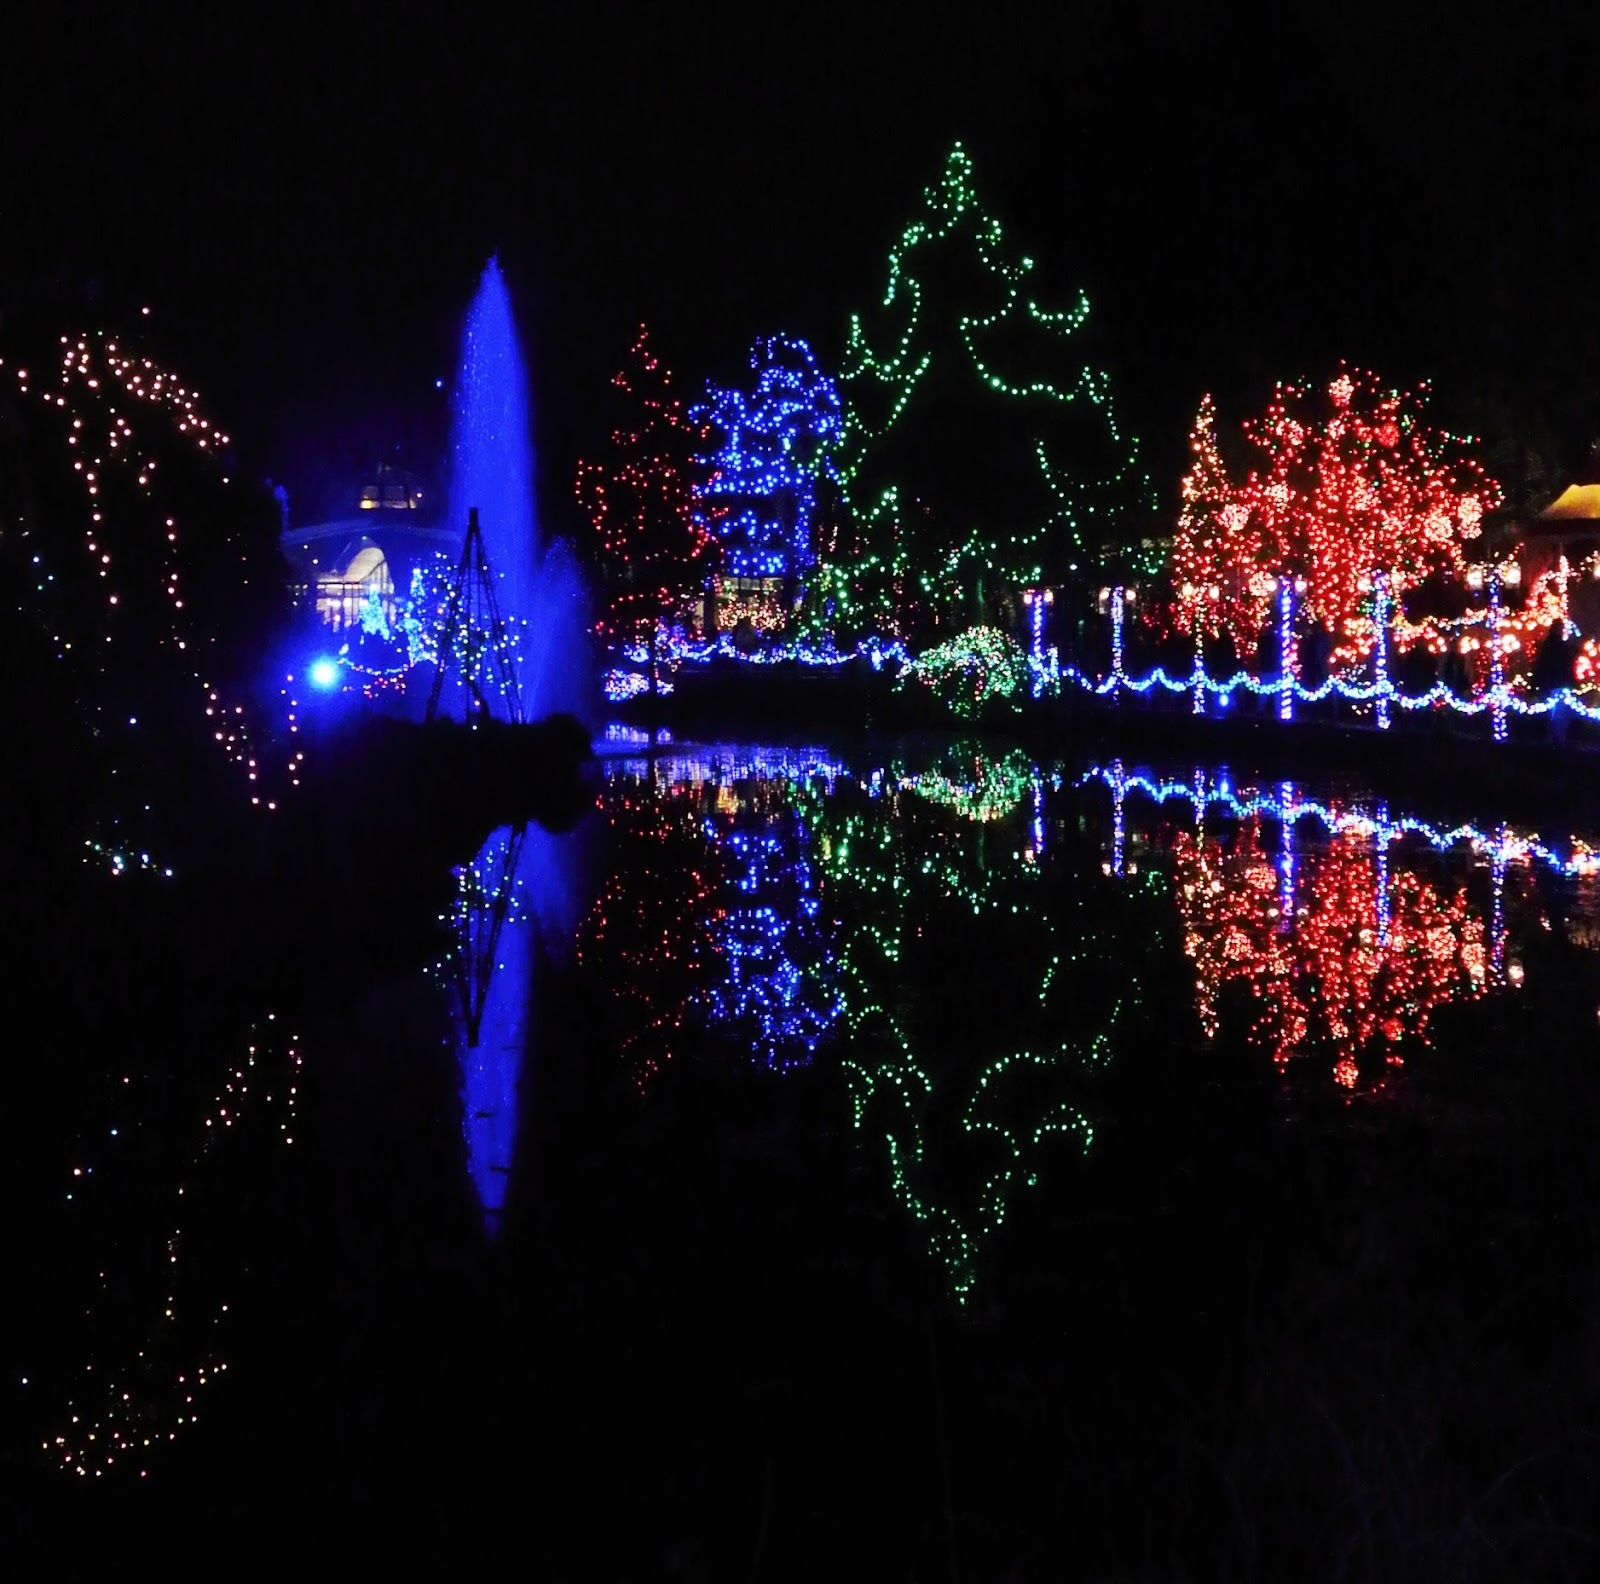 vivian - in stitches: Christmas Lights, Van Dusen Gardens